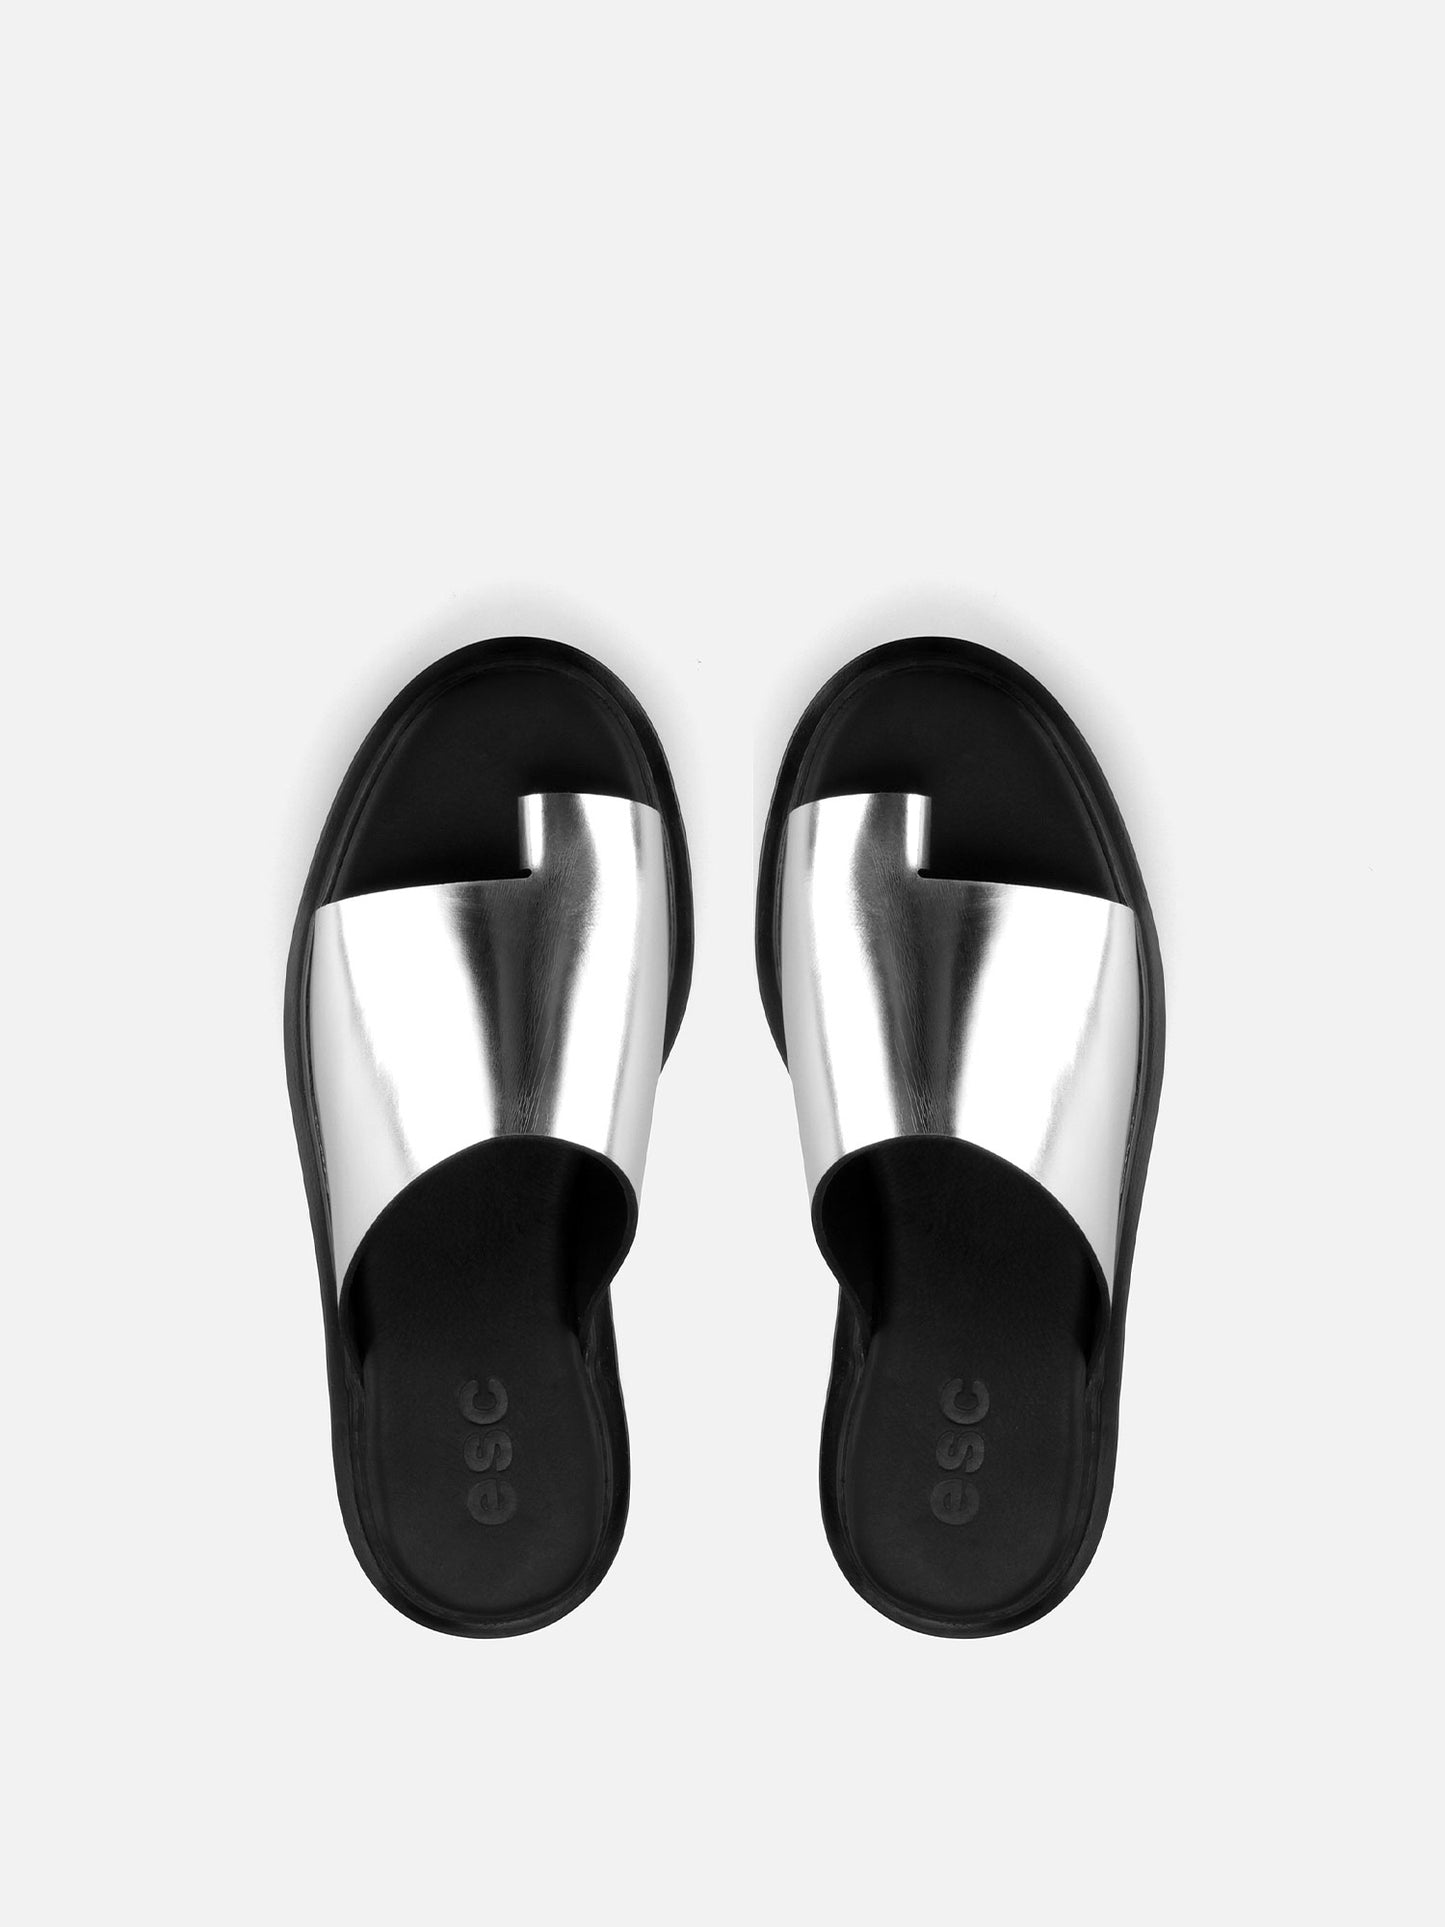 JOY Plataform Sandals - Silver